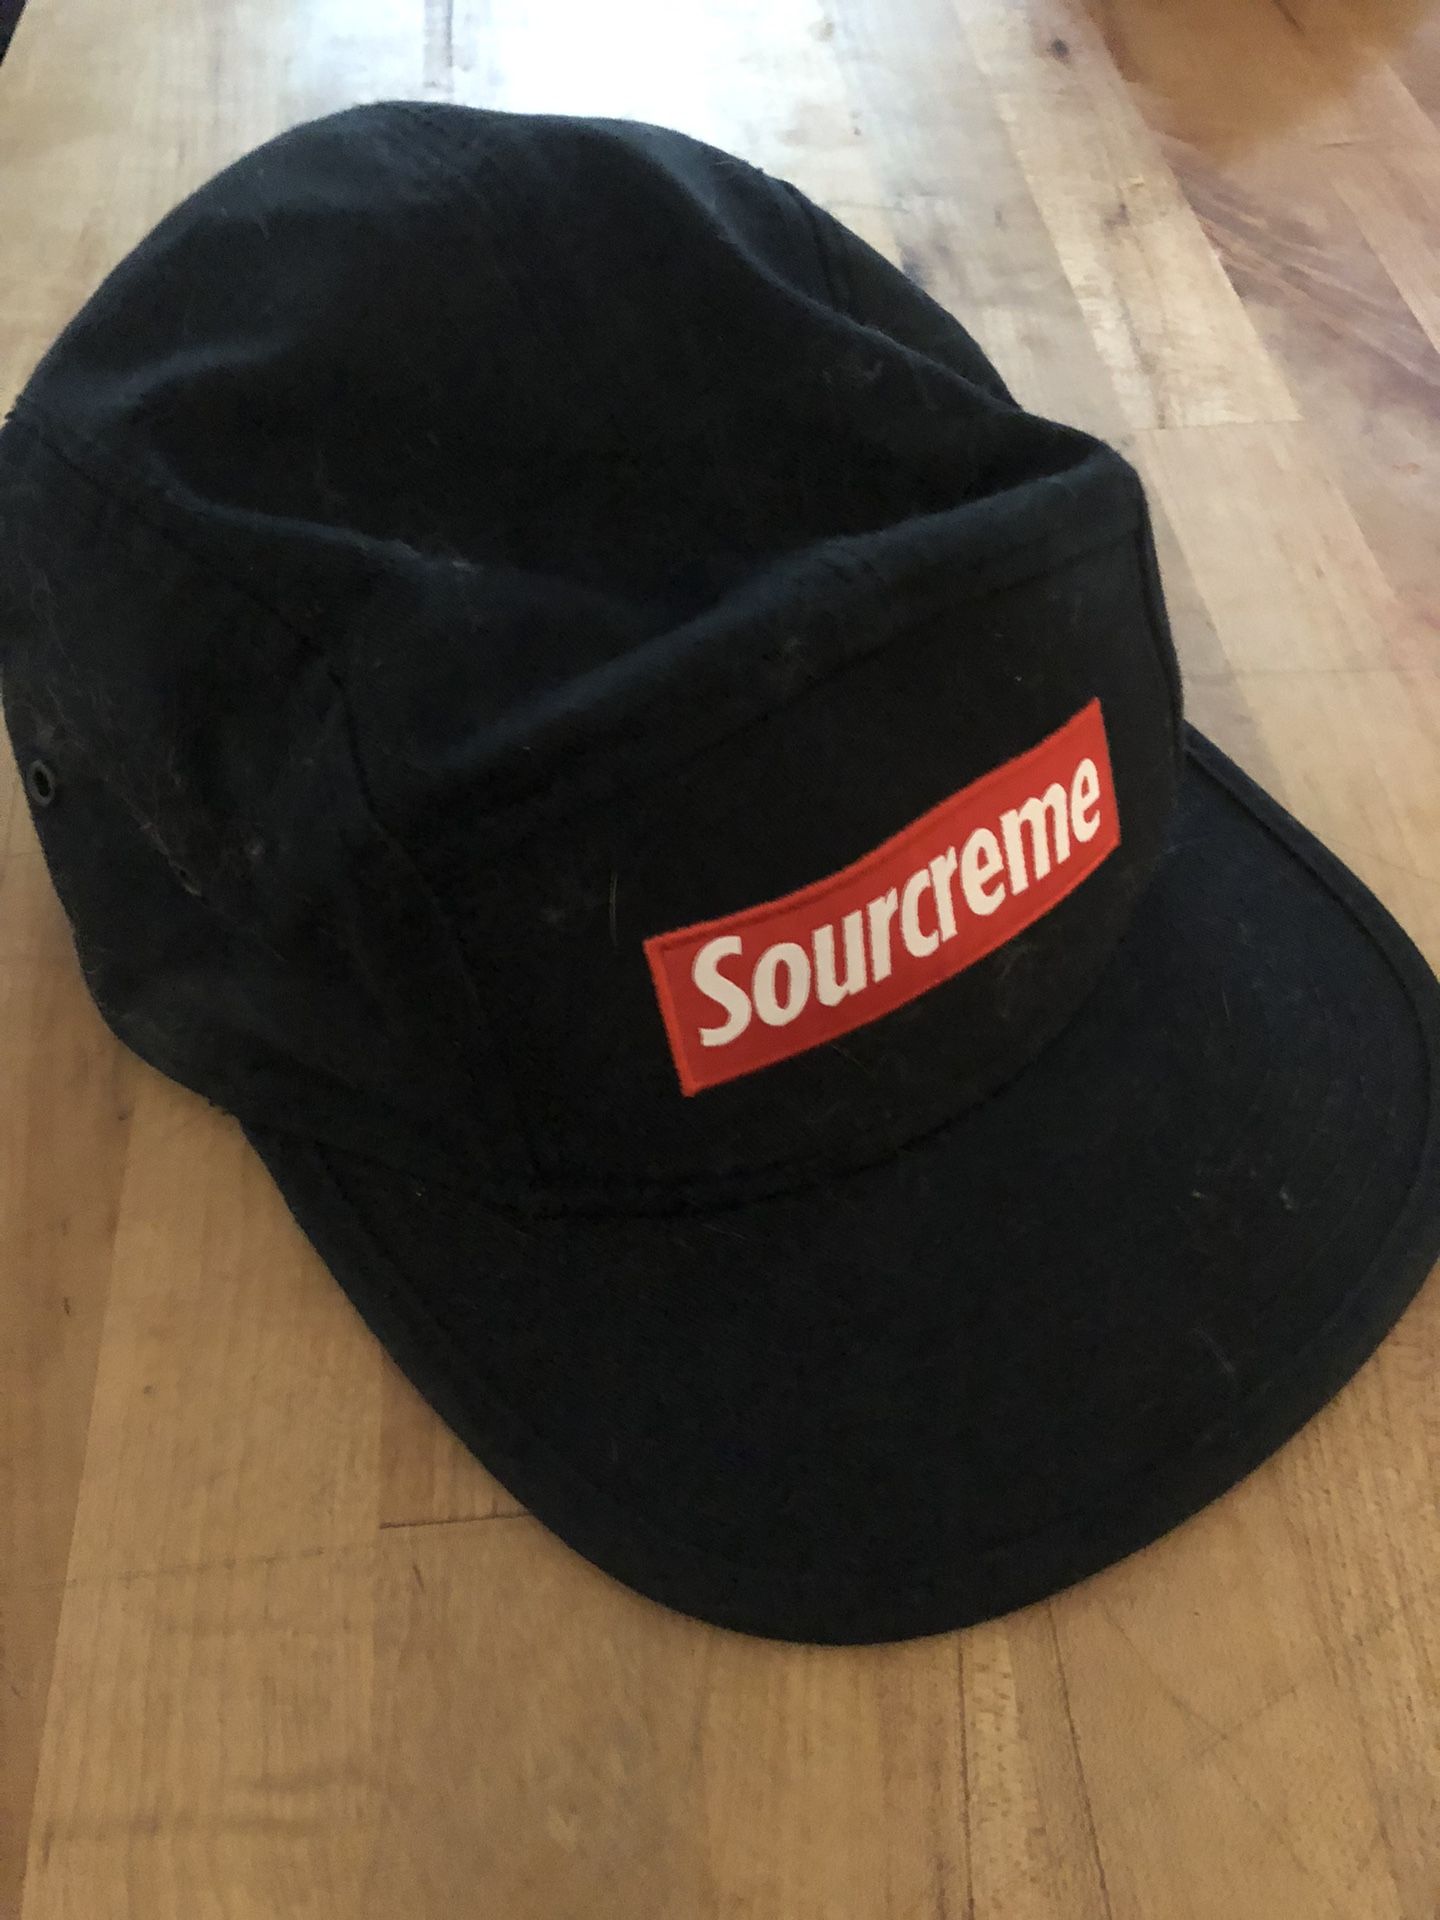 “Supreme” Sourcreme Hat